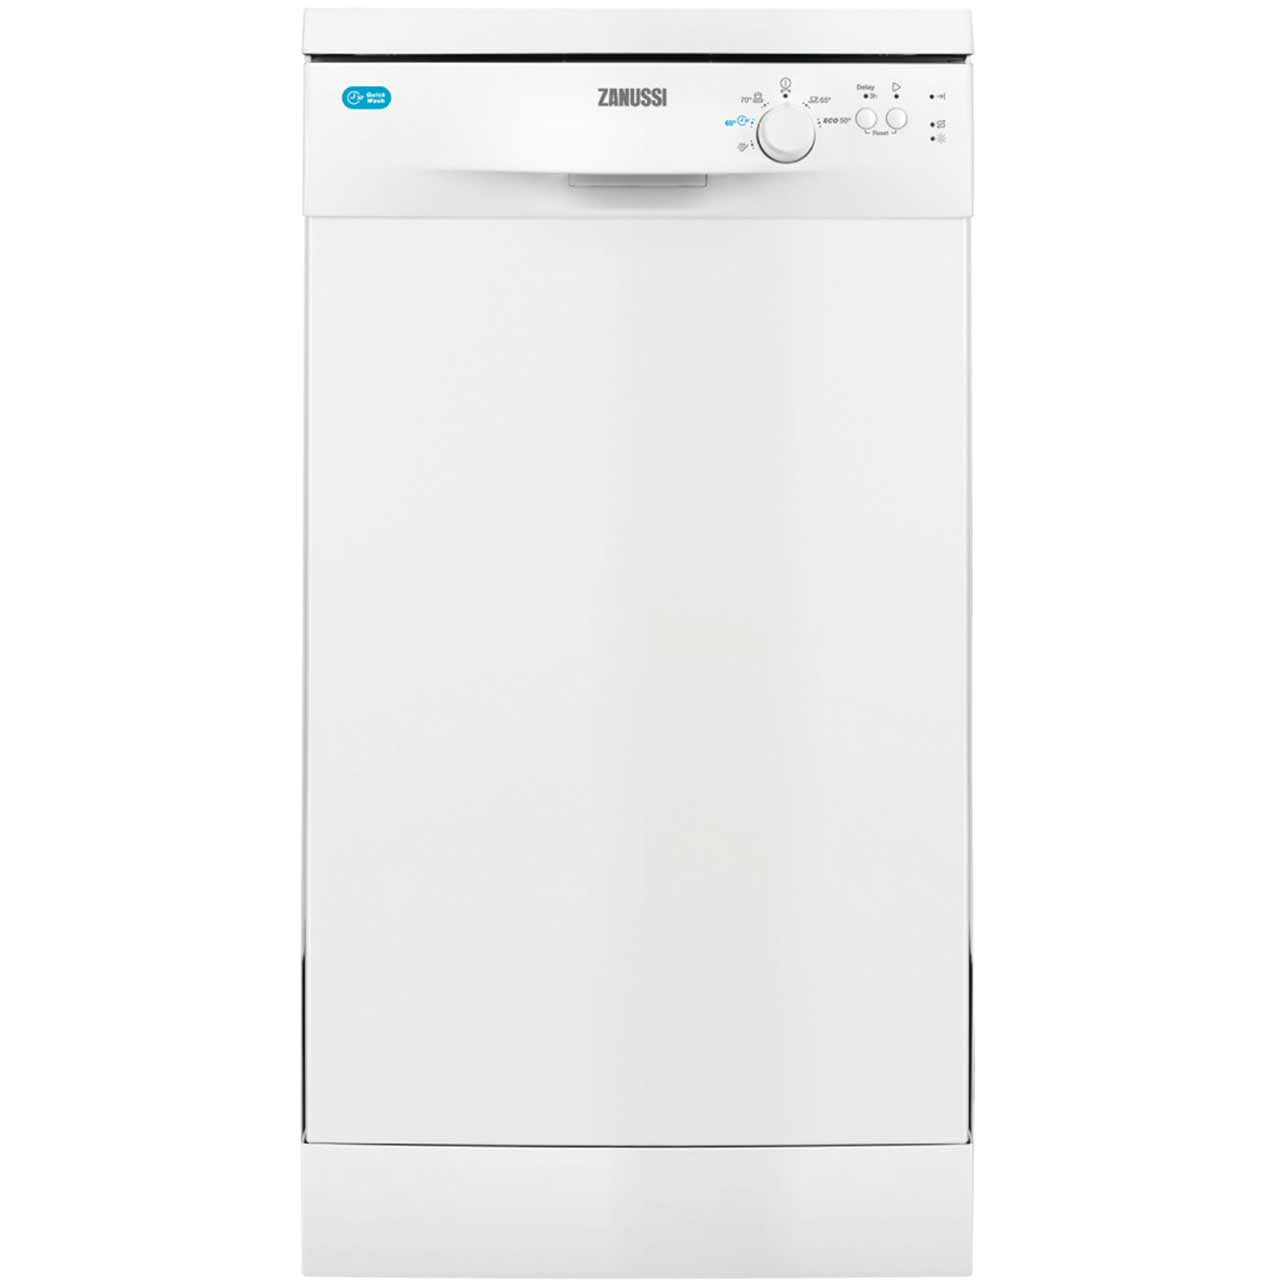 Zanussi ZDS12002WA Slimline Dishwasher Review